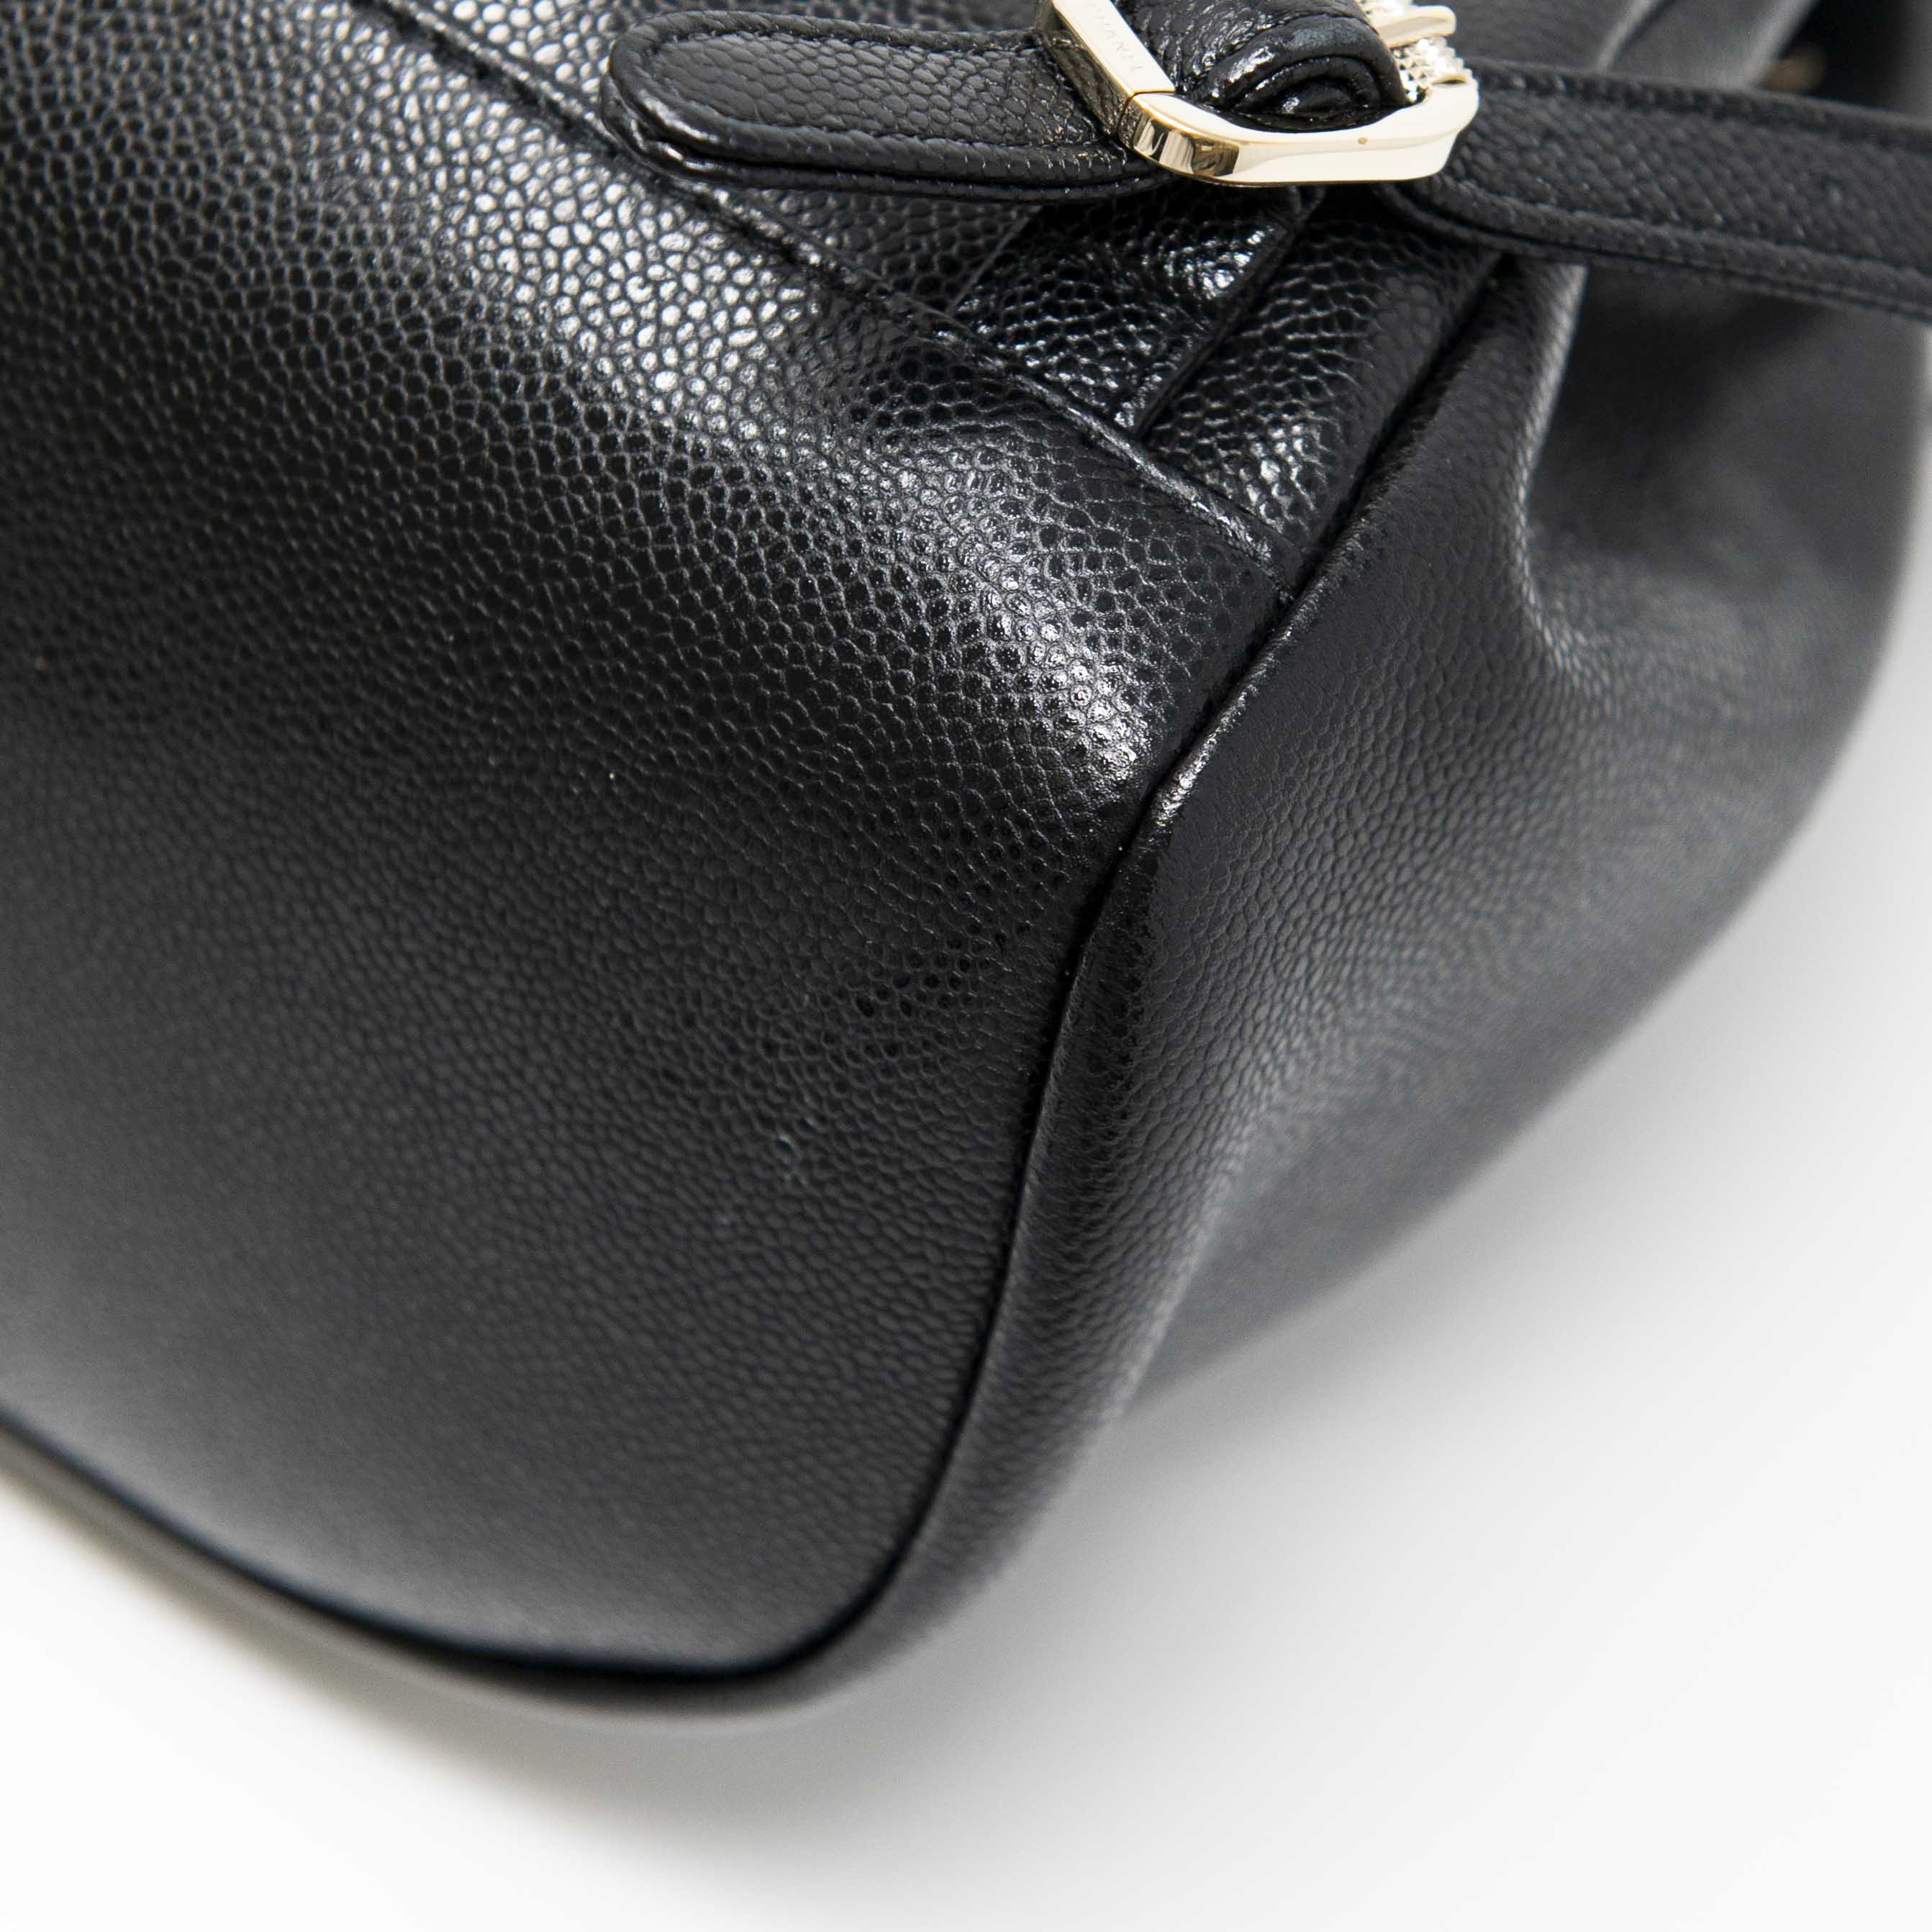 Chanel Black Mini Affinity Backpack